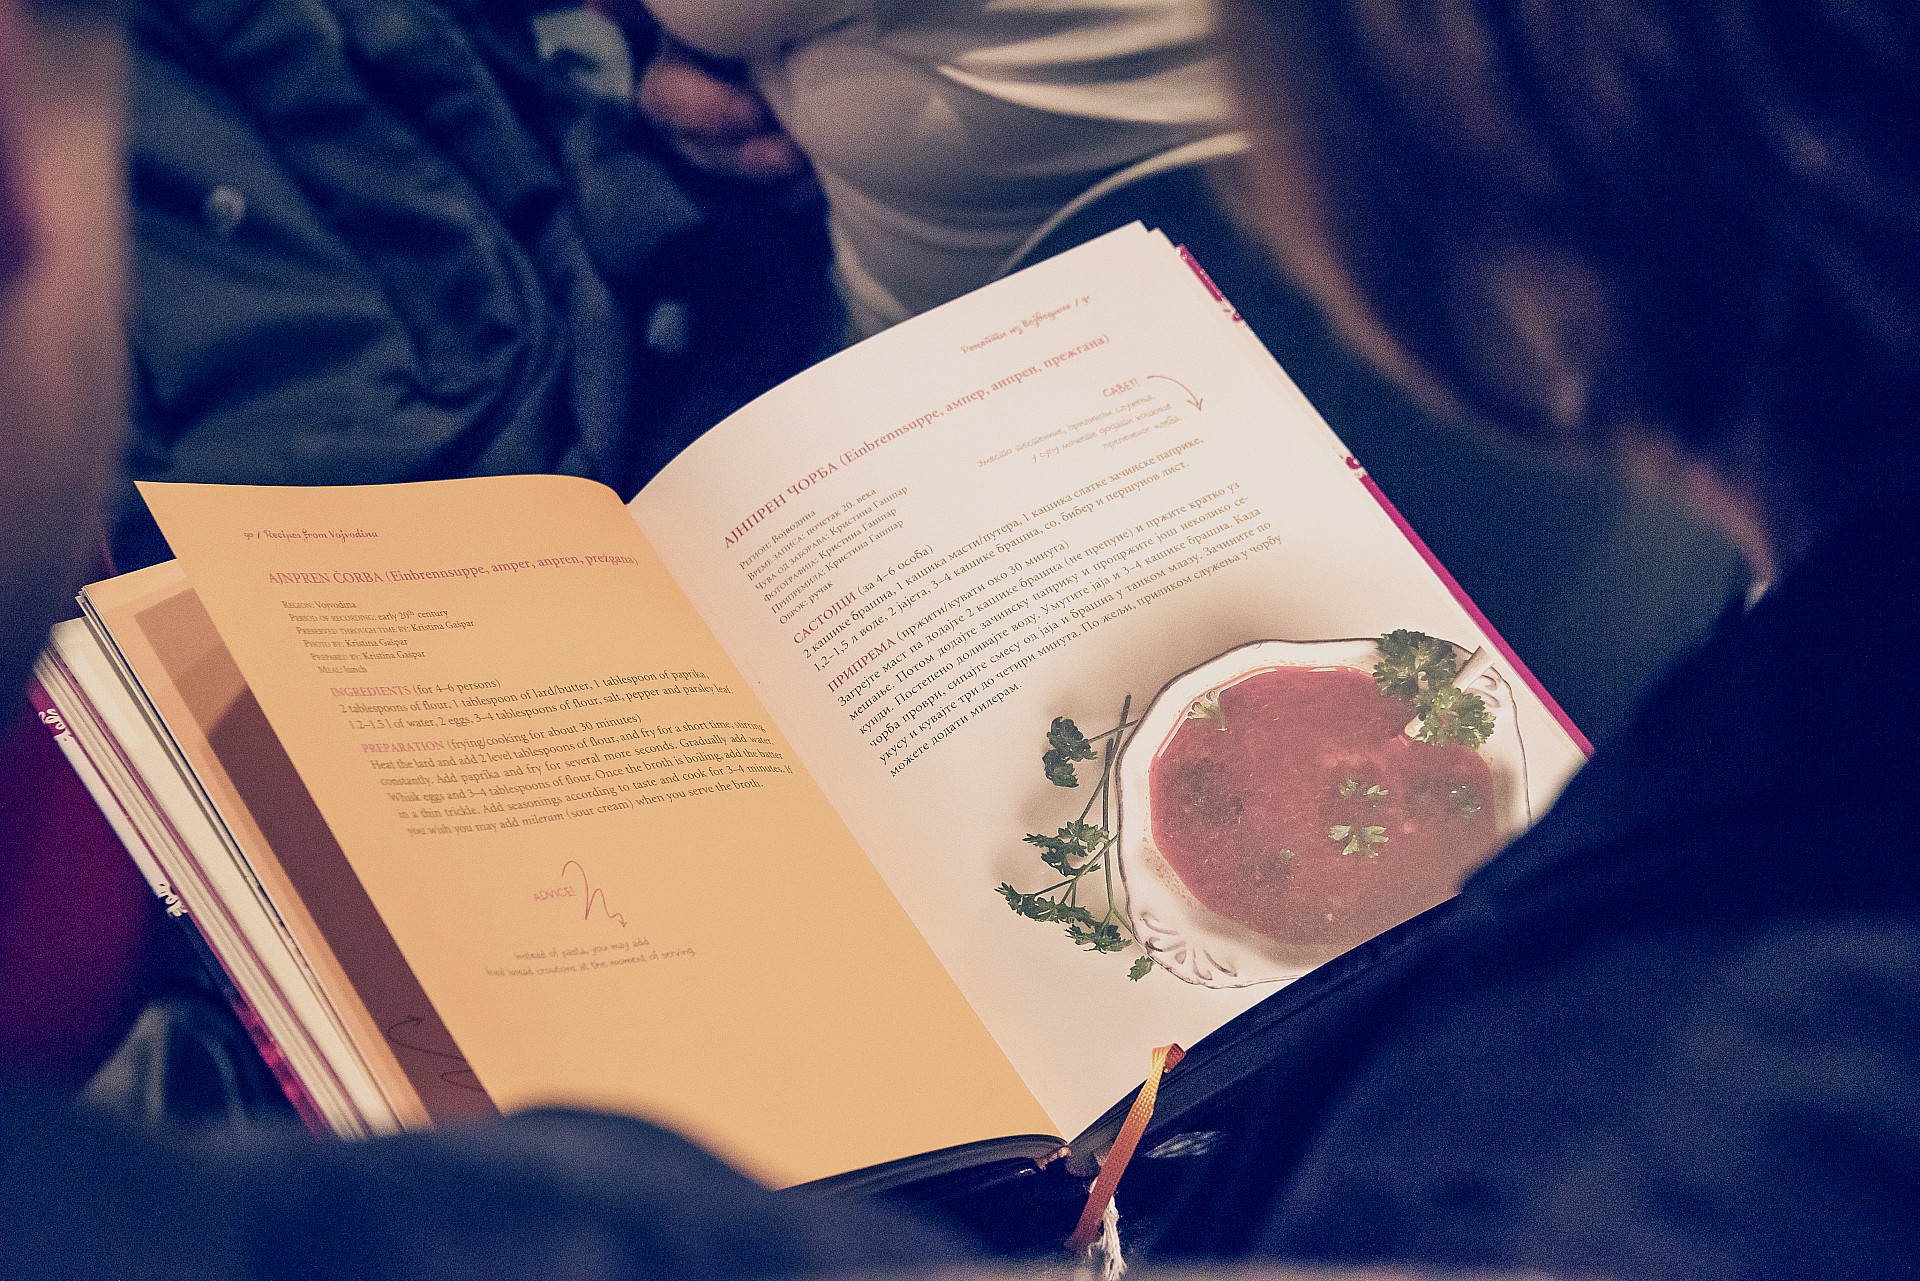 Pomozite nam da objavimo drugo izdanje knjige "Tradicionalni recepti domaće srpske kuhinje"